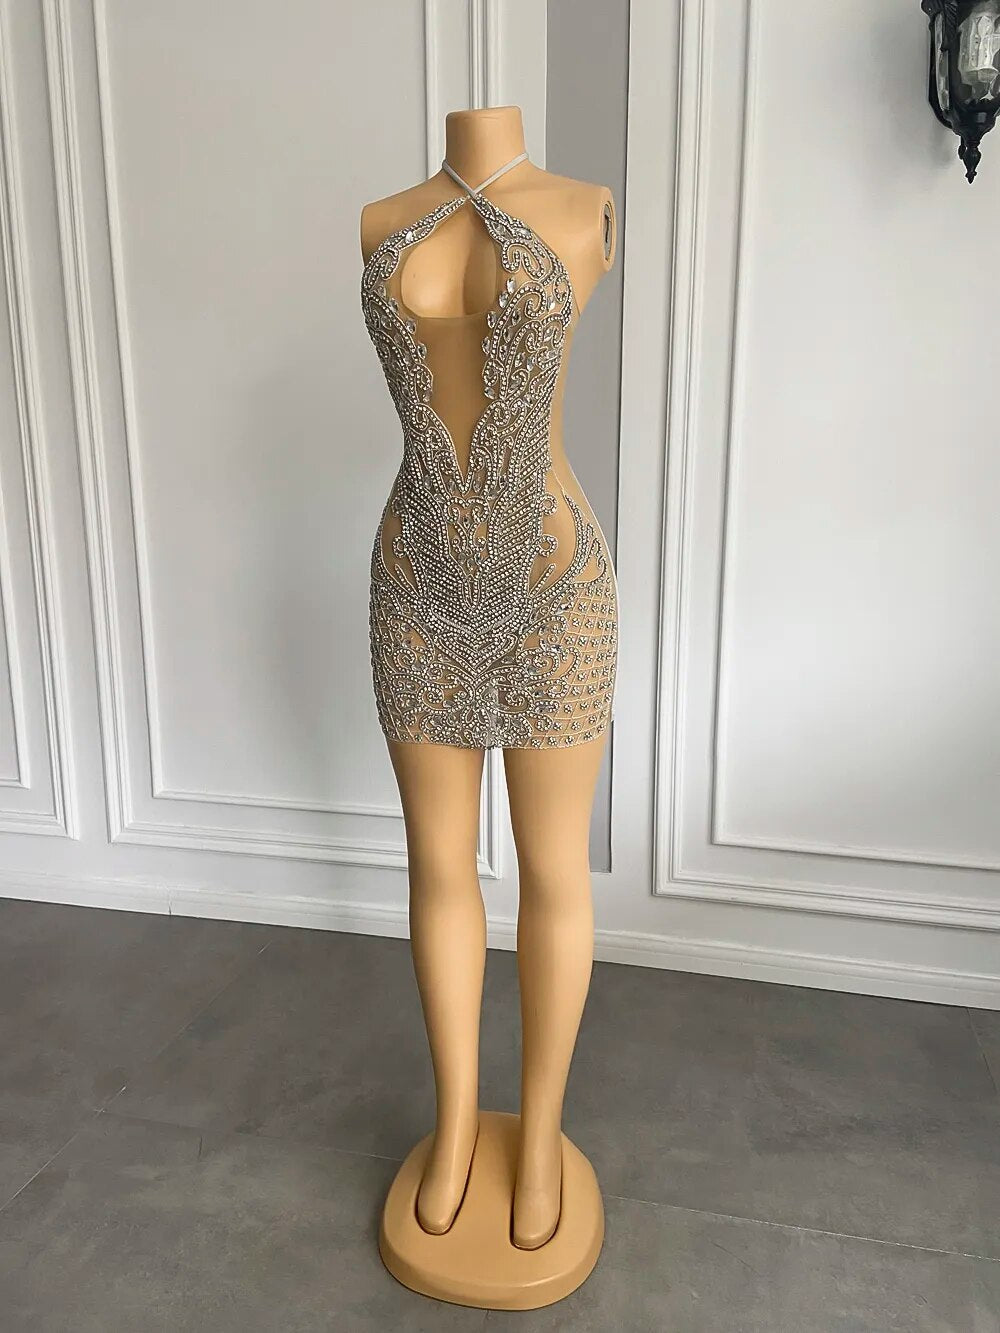 Kelsie Diamond Mini Dress Fashion Closet Clothing